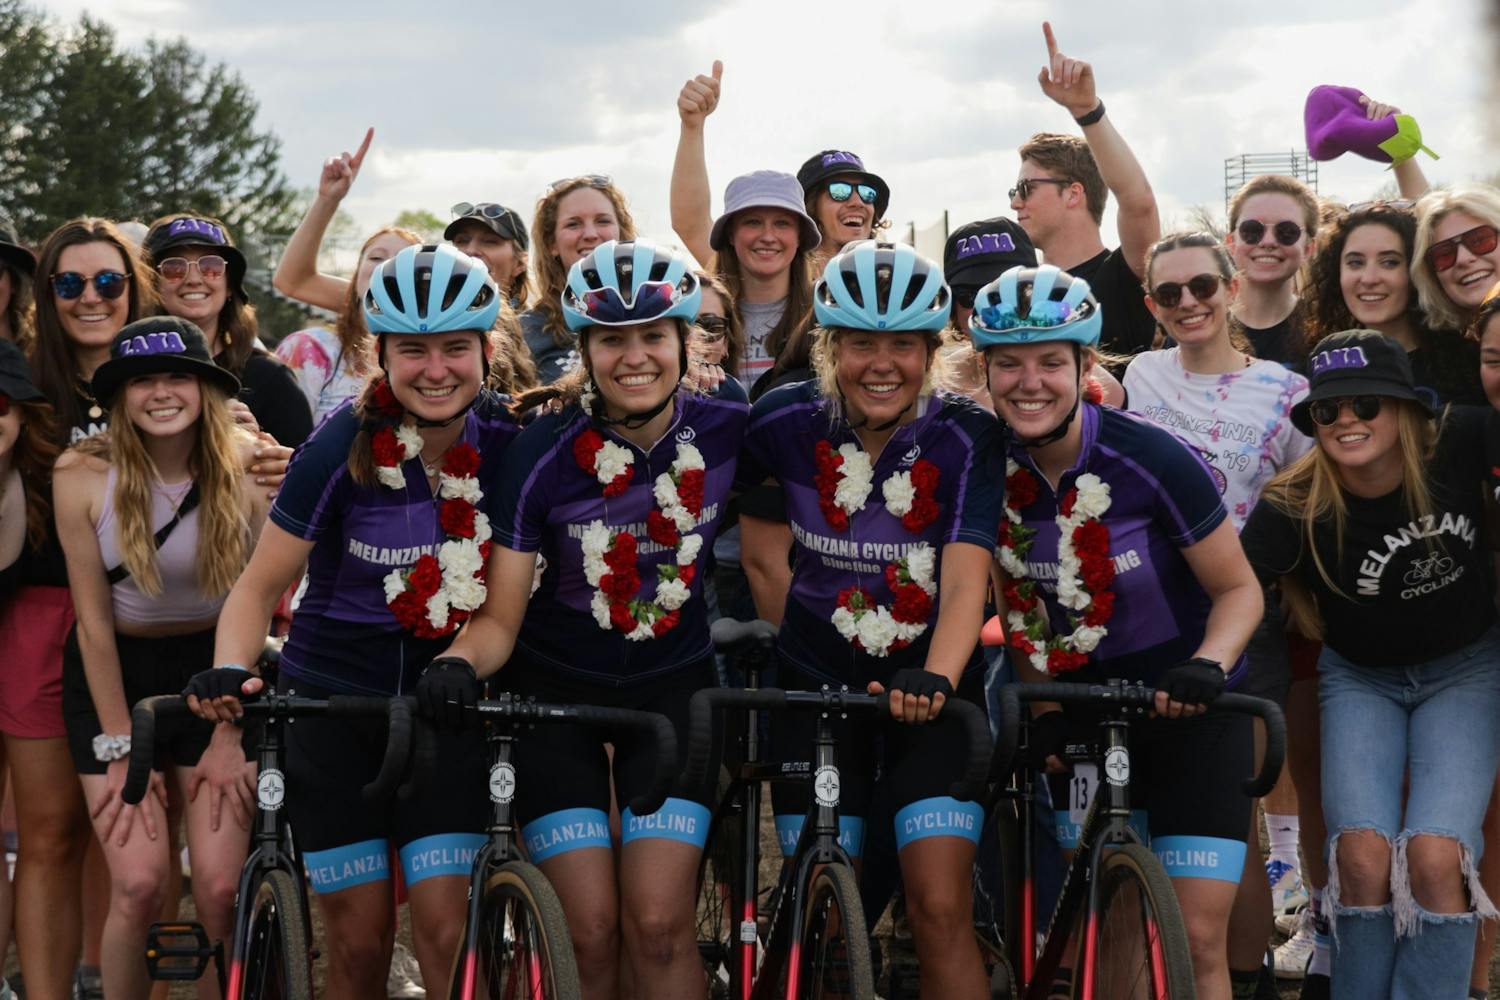 GALLERY: Melanzana Cycling wins Women's Little 500 race